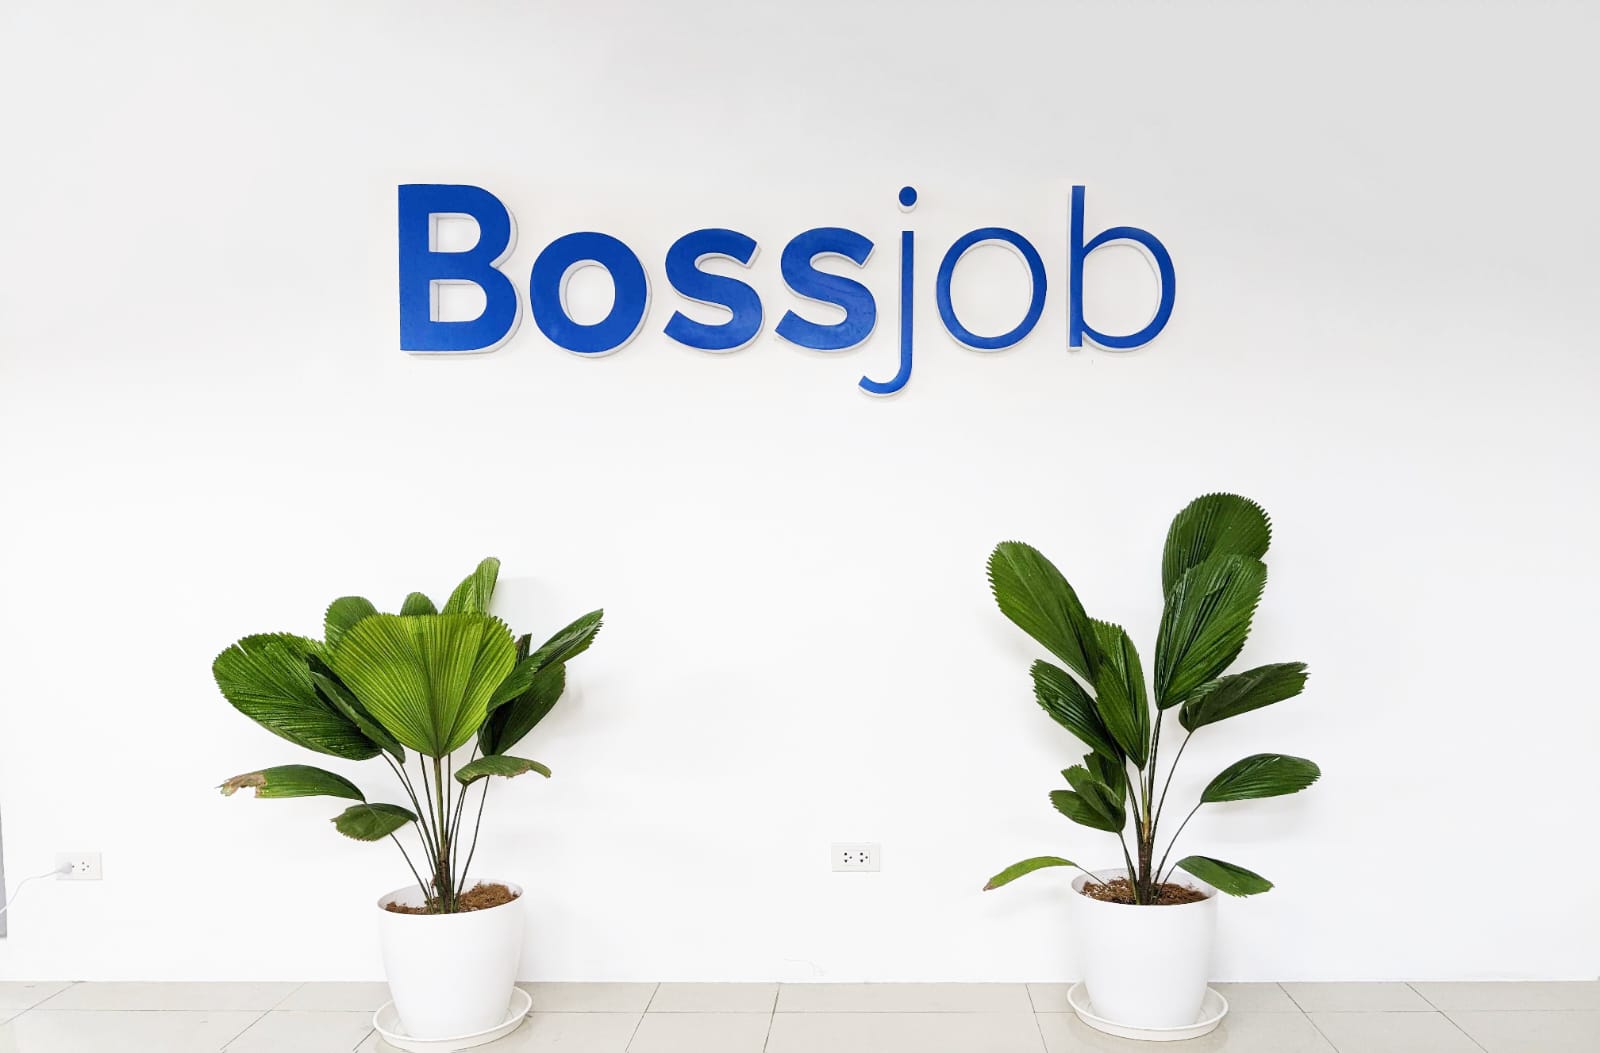 PH-born Bossjob bridges SEA talent to Japanese market, fuels expansion